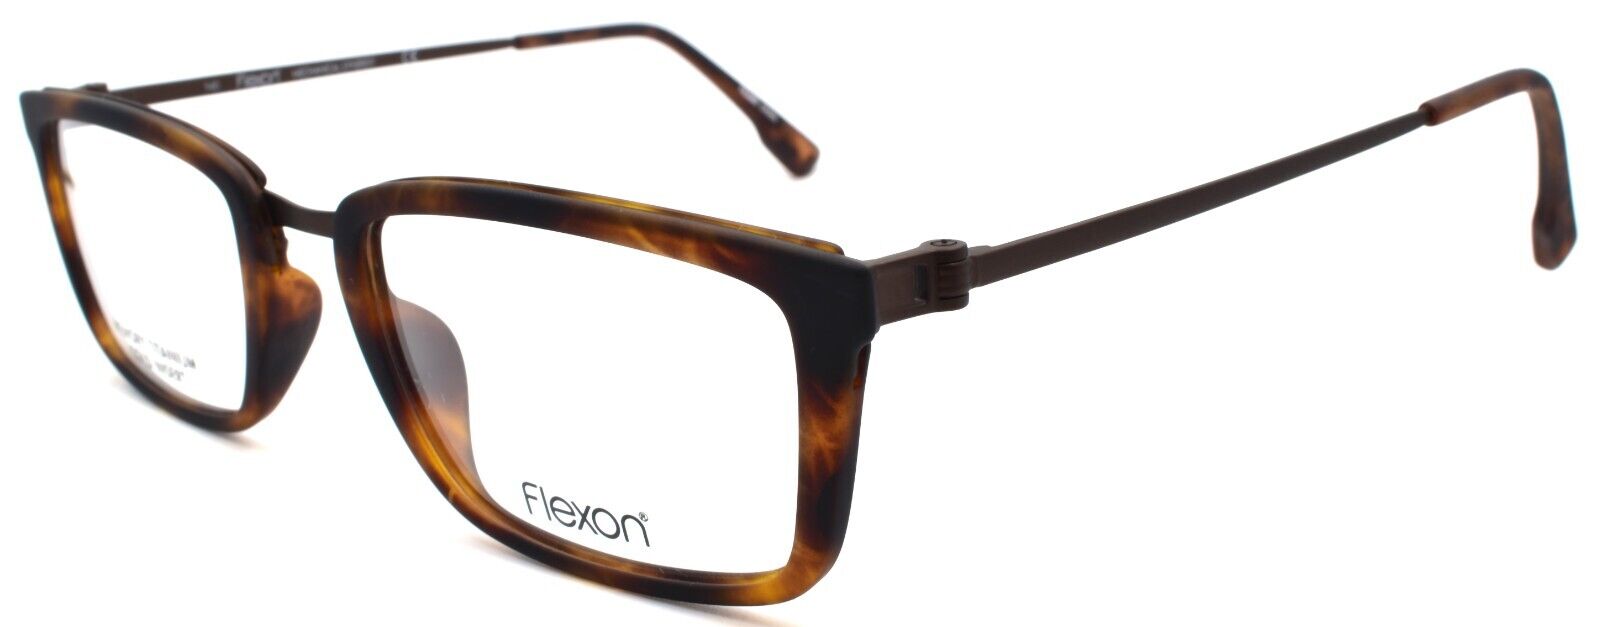 1-Flexon E1084 215 Men's Eyeglasses Frames Tortoise 51-20-140 Memory Titanium-883900200264-IKSpecs